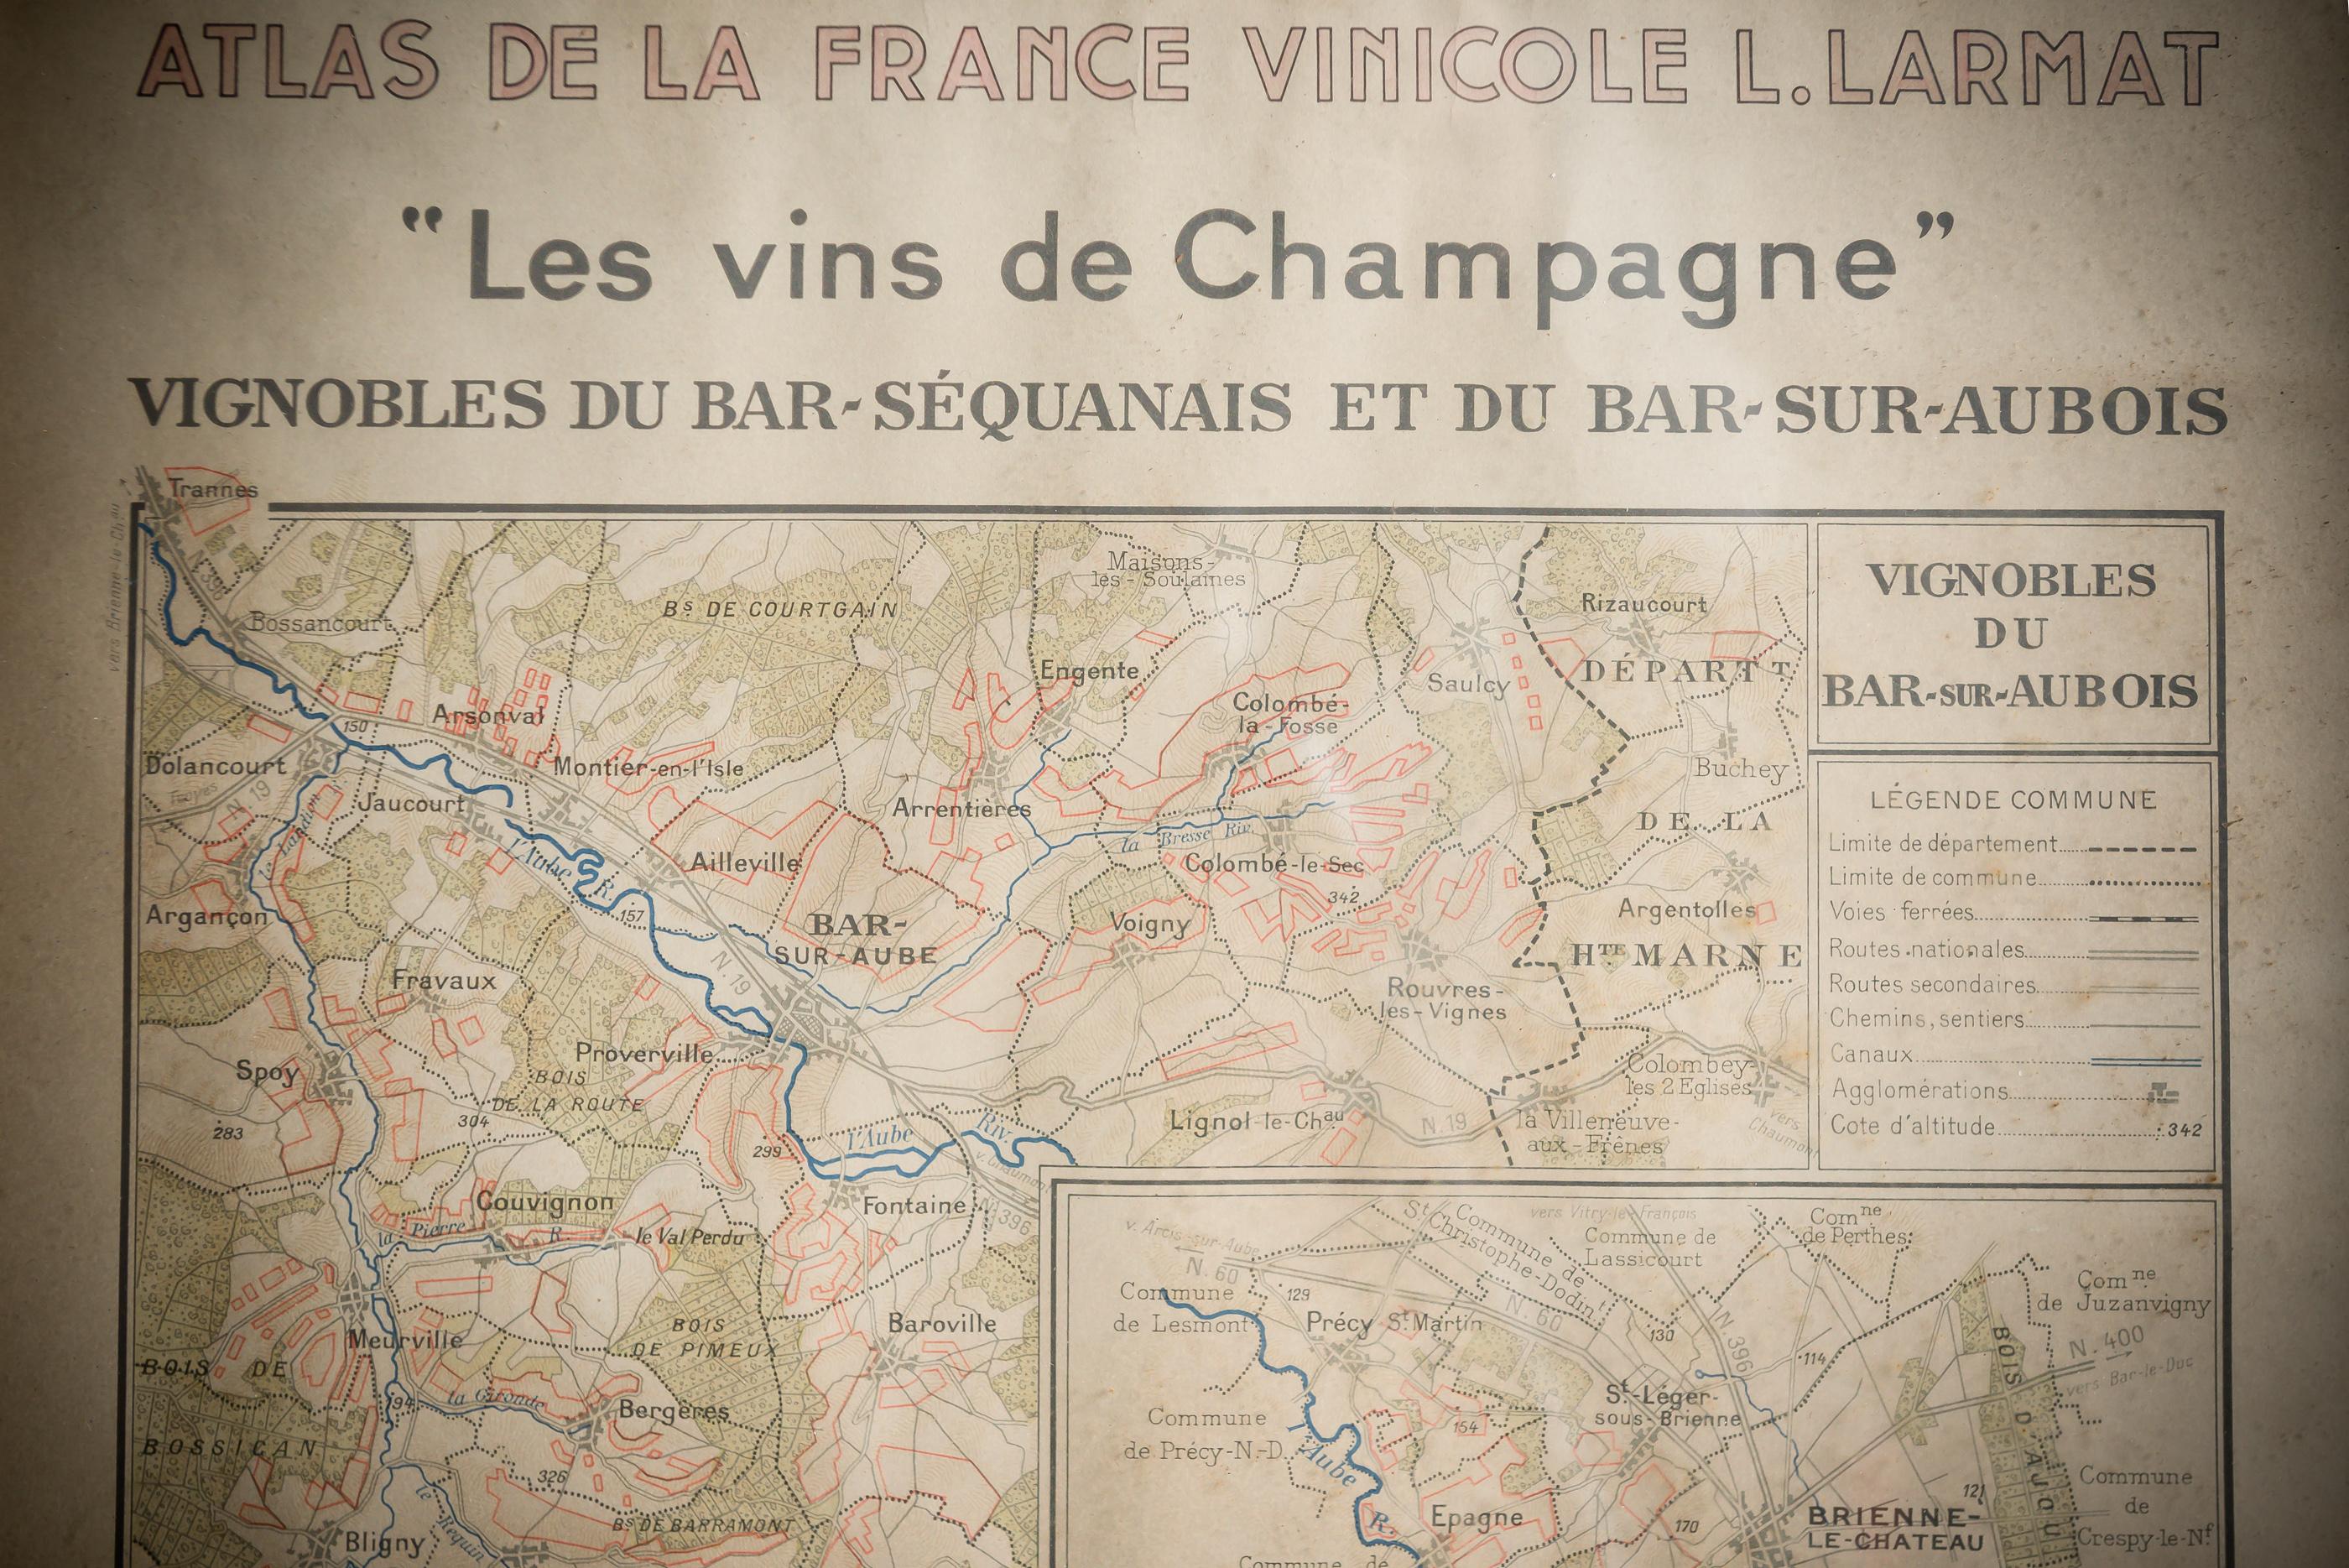 champagne wine map